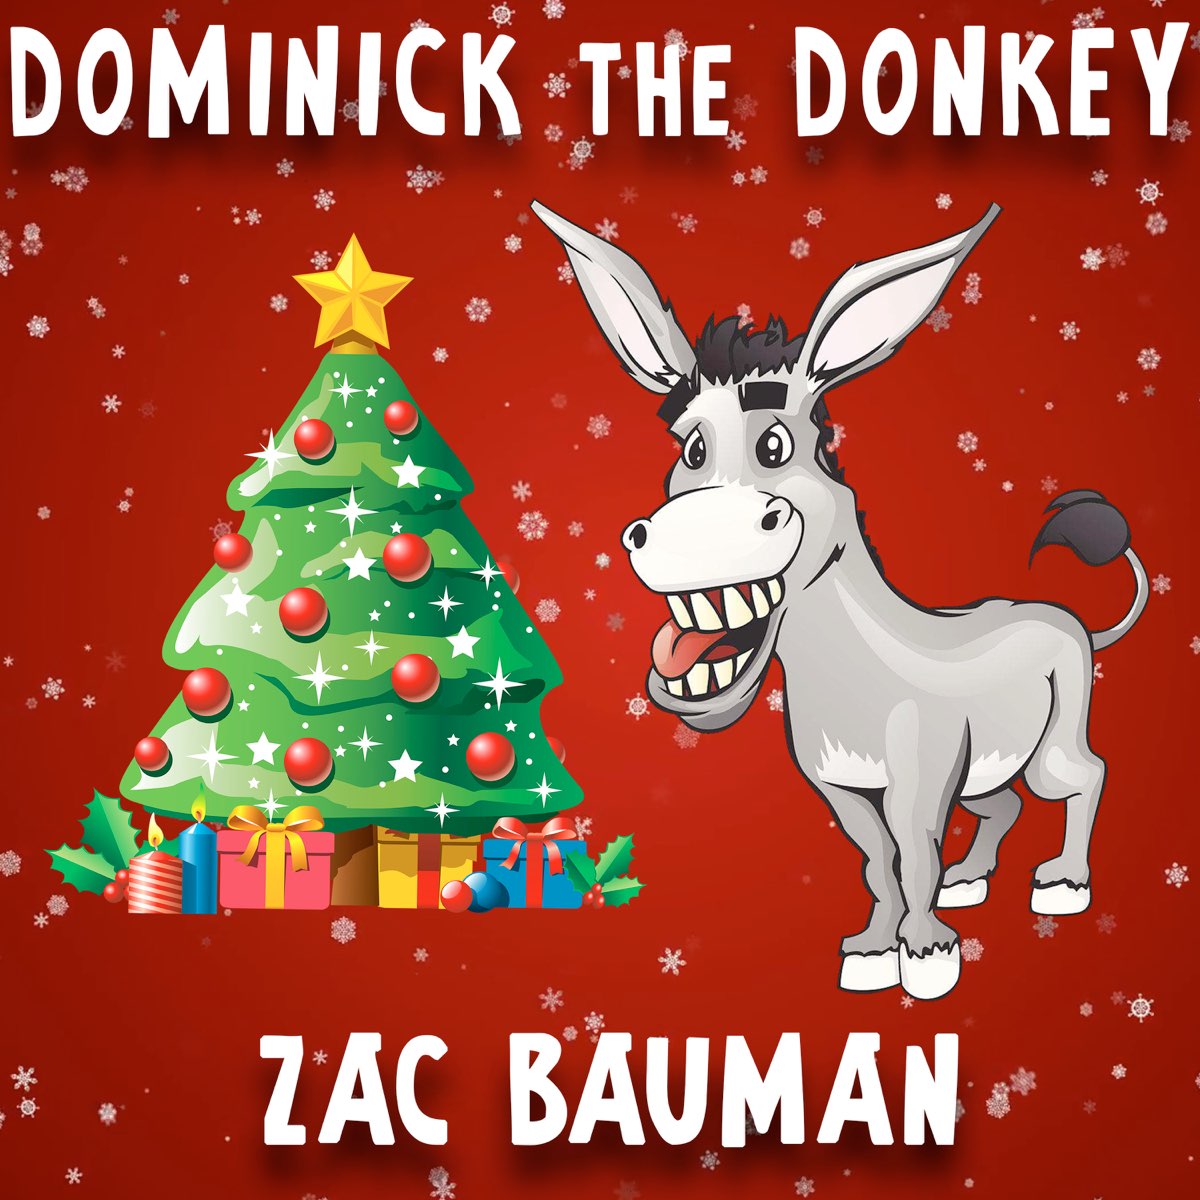 Dominick the Donkey - Single - Album by Zac Bauman - Apple Music